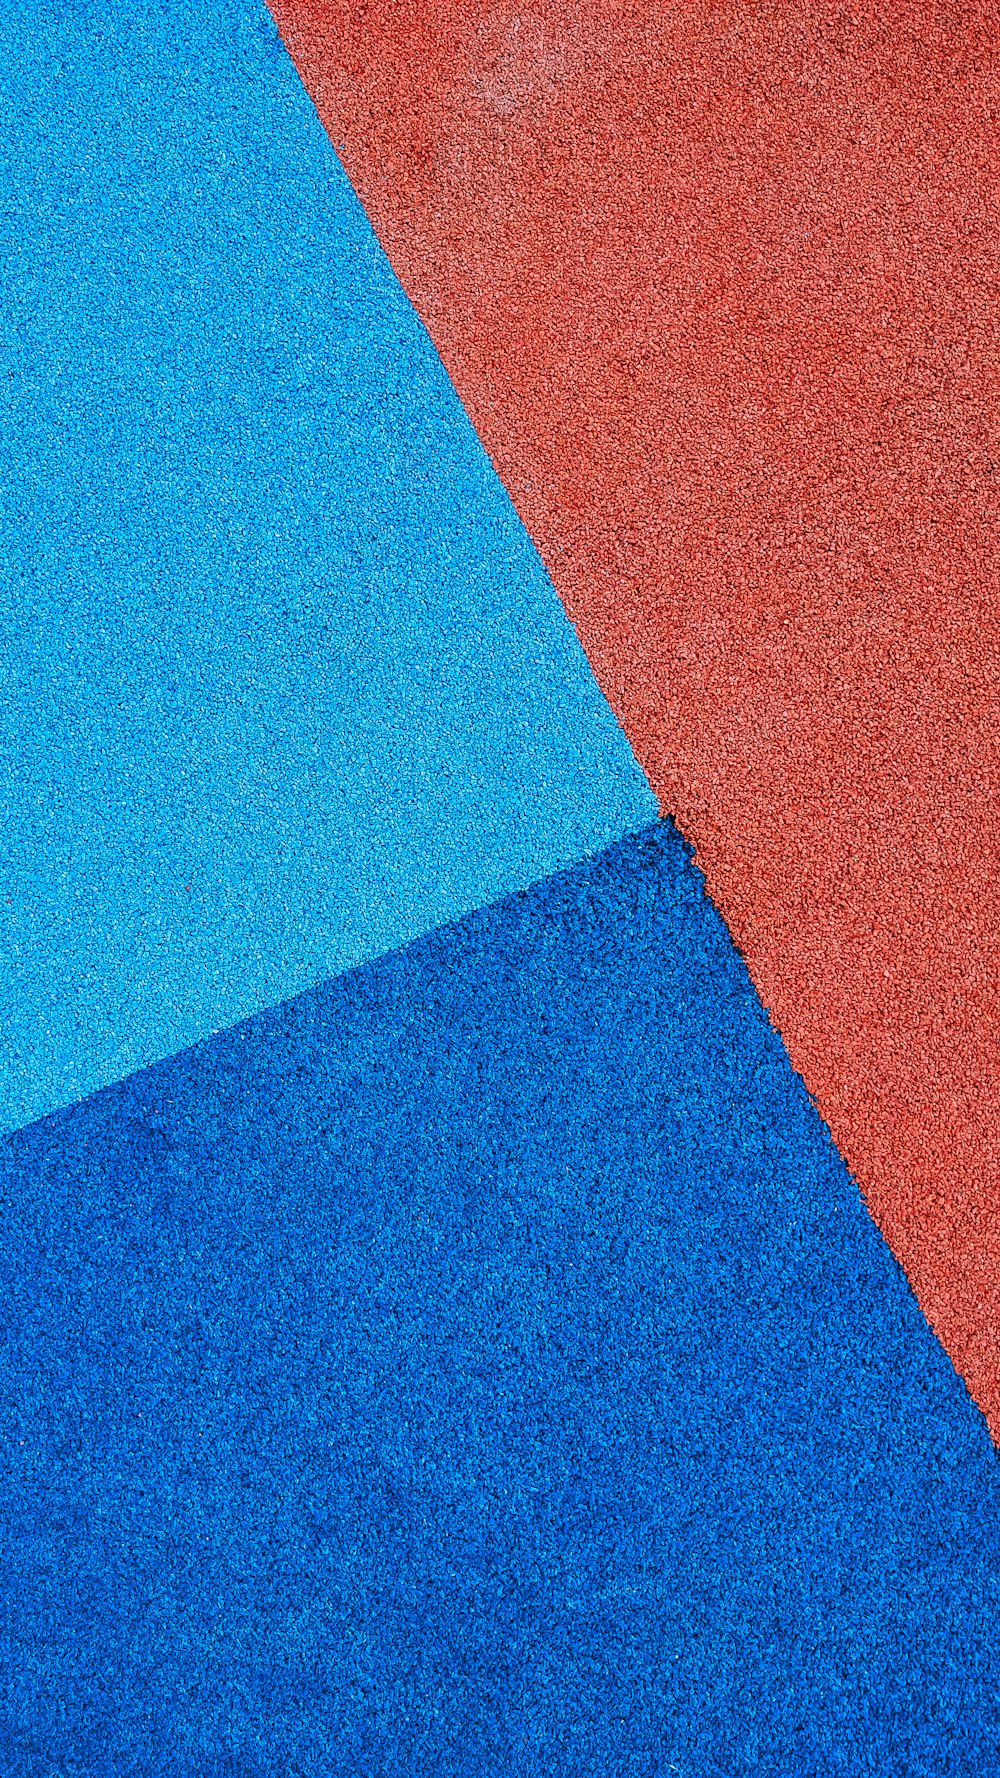 a close up of a red, blue, and orange carpet